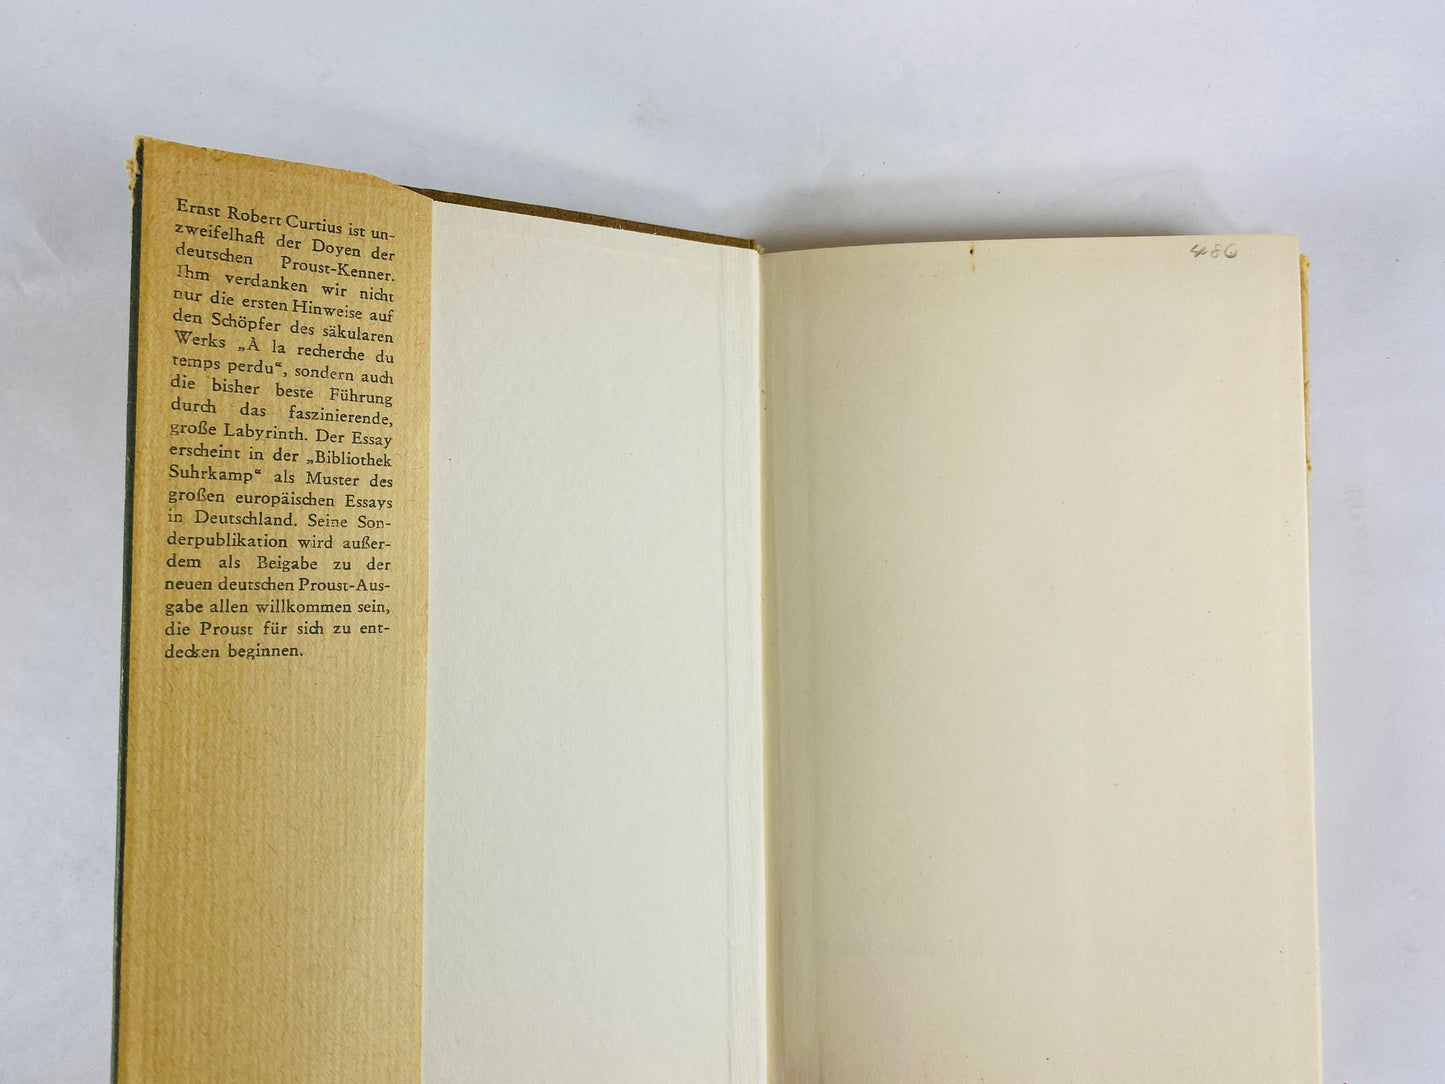 Ernst Robert Curtius Marcel Proust vintage collector book circa 1952 FIRST EDITION literary critique written in original German